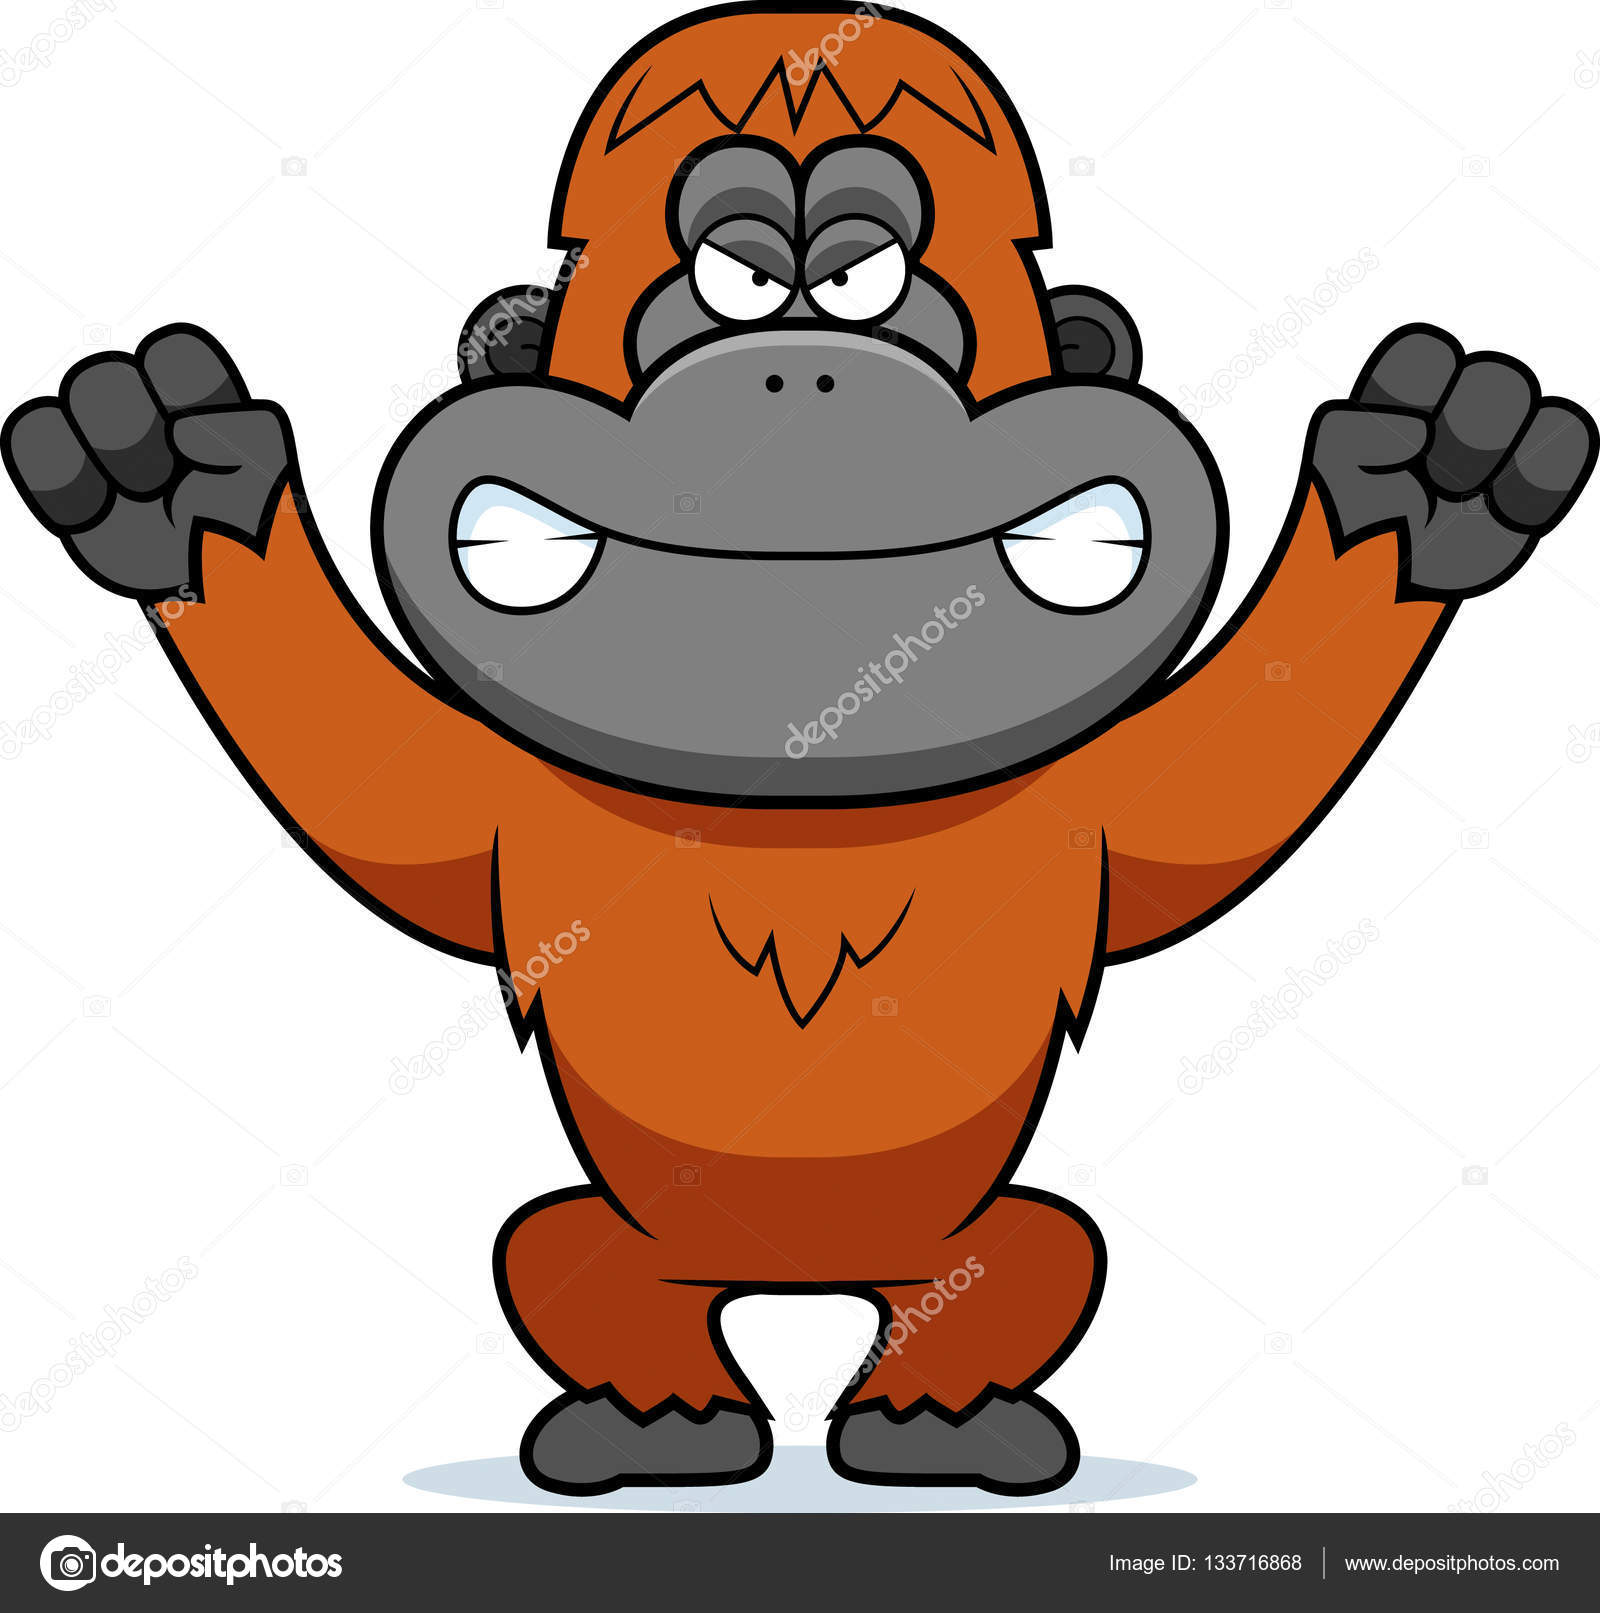 Orangutan Clipart | Free download on ClipArtMag